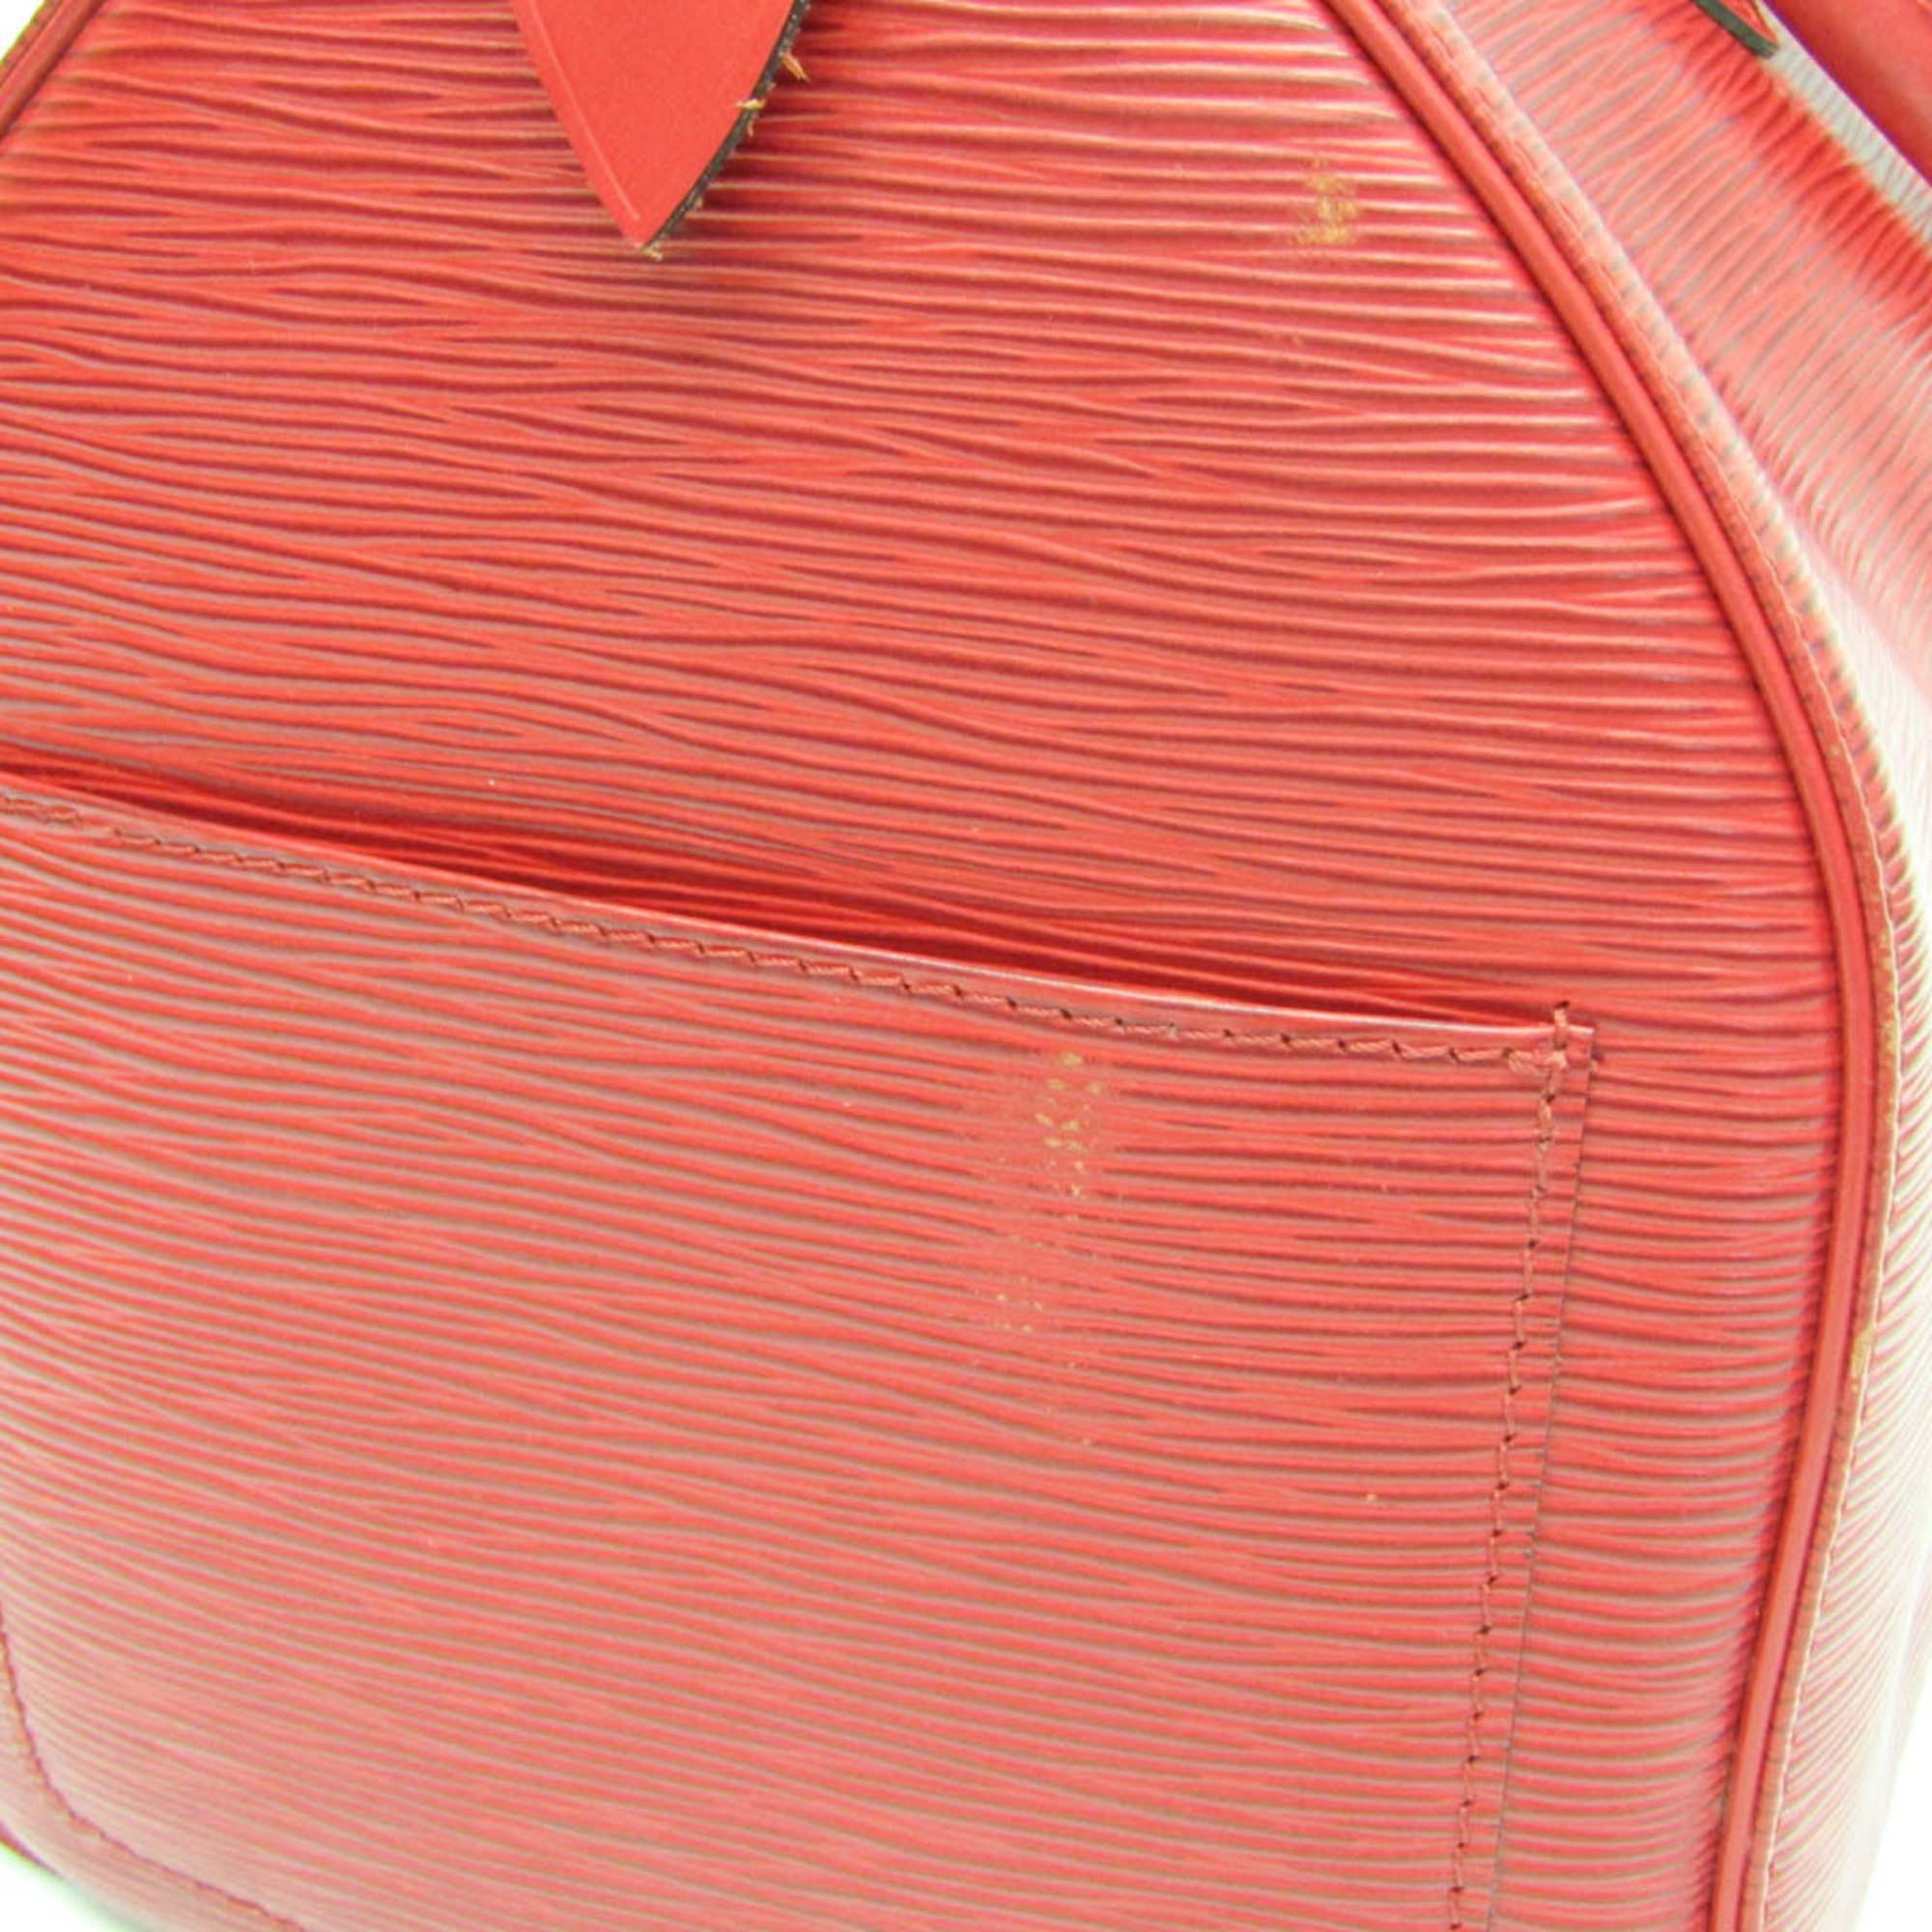 Louis Vuitton Epi Speedy 35 M42997 Women's Handbag Castilian Red